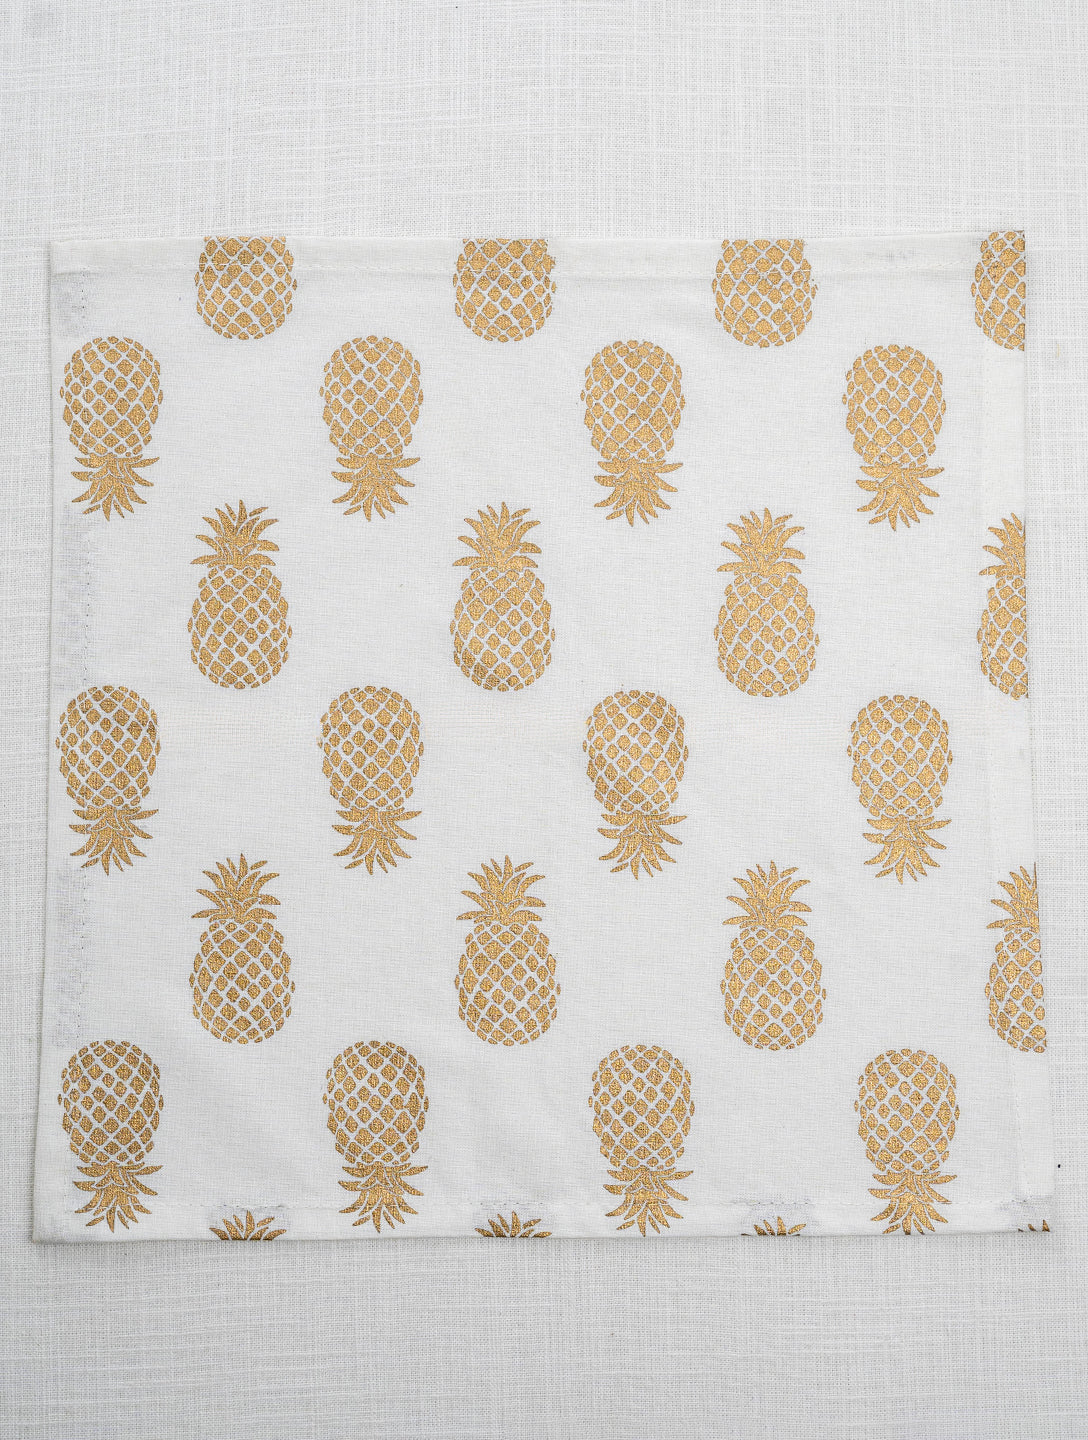 White Cotton Pineapple Printed 12x12 Inch Napkin Set of 6